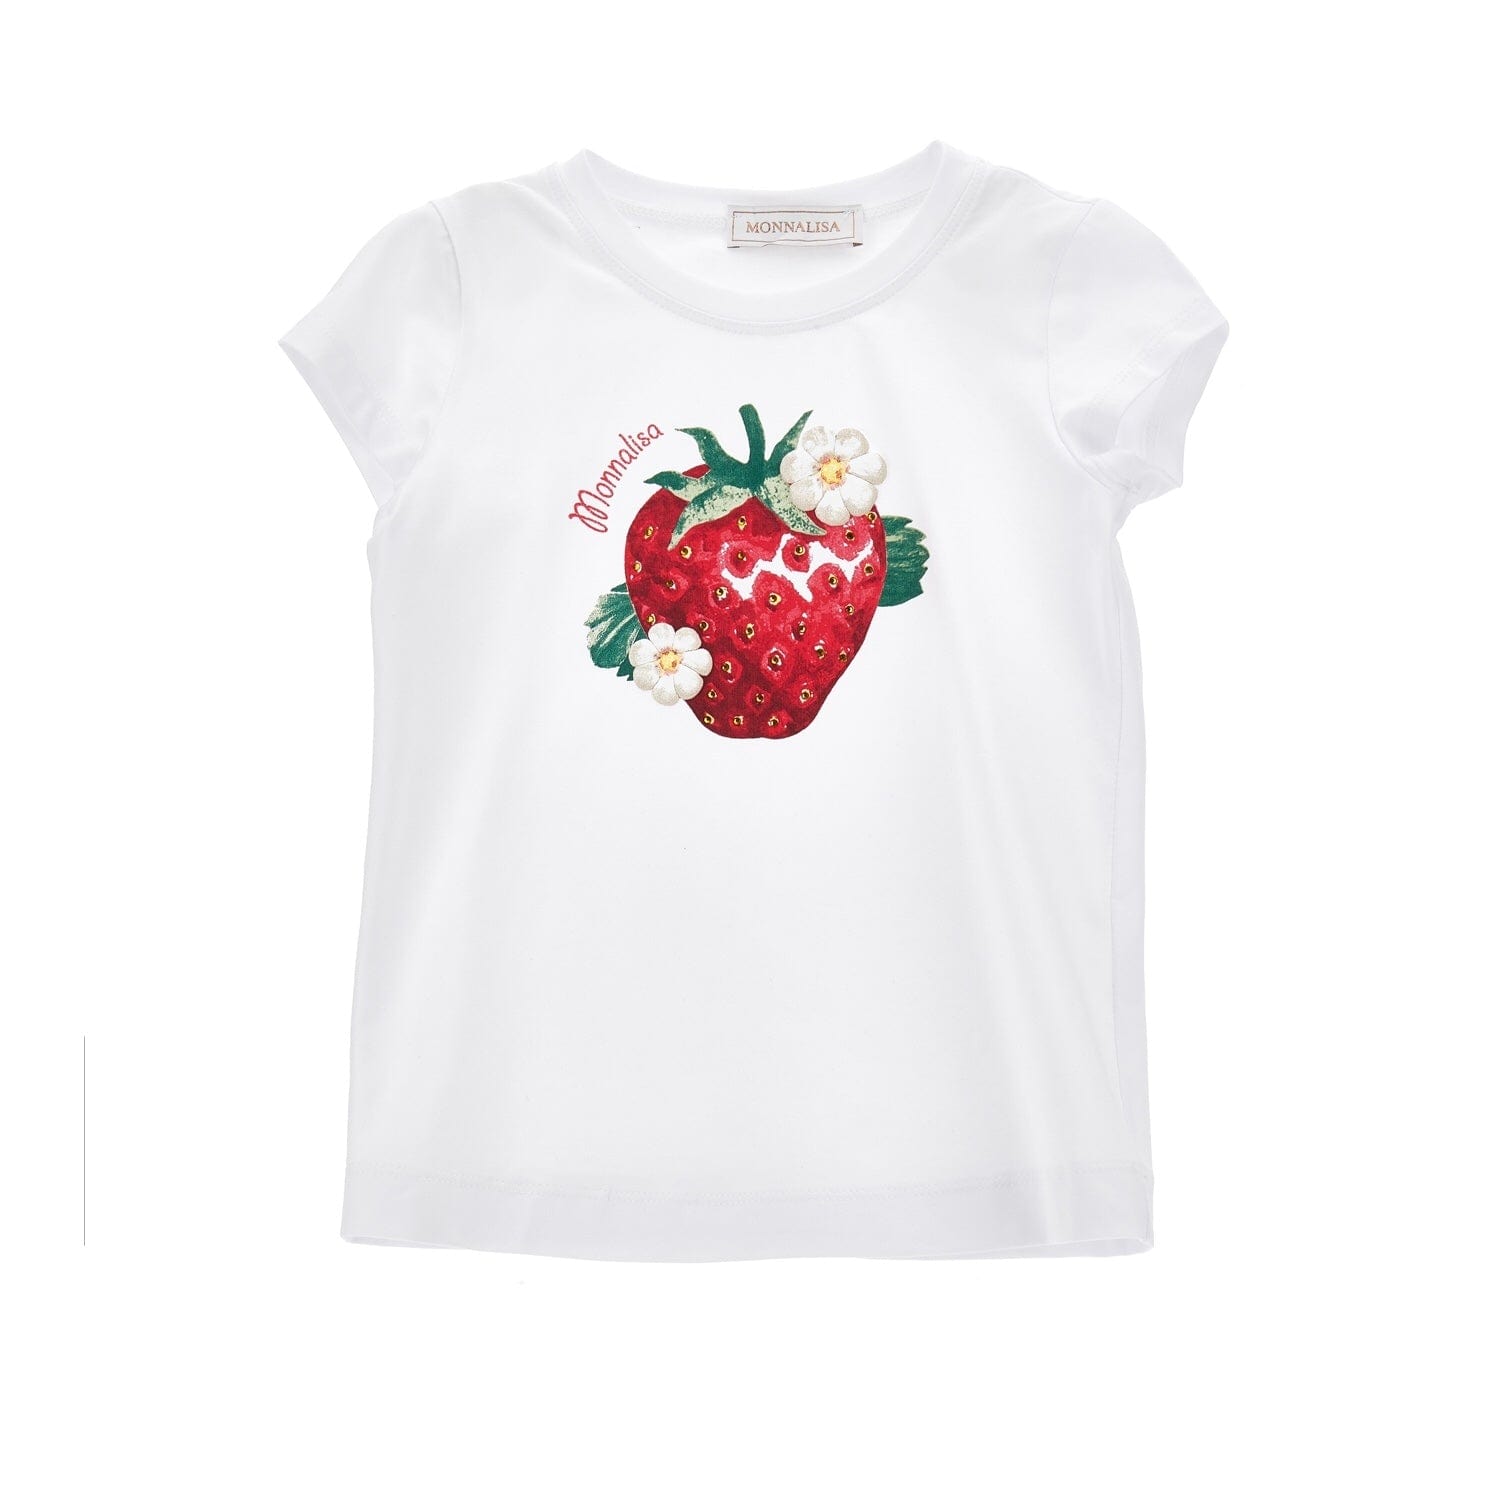 MONNALISA - Strawberry Skirt Set - White